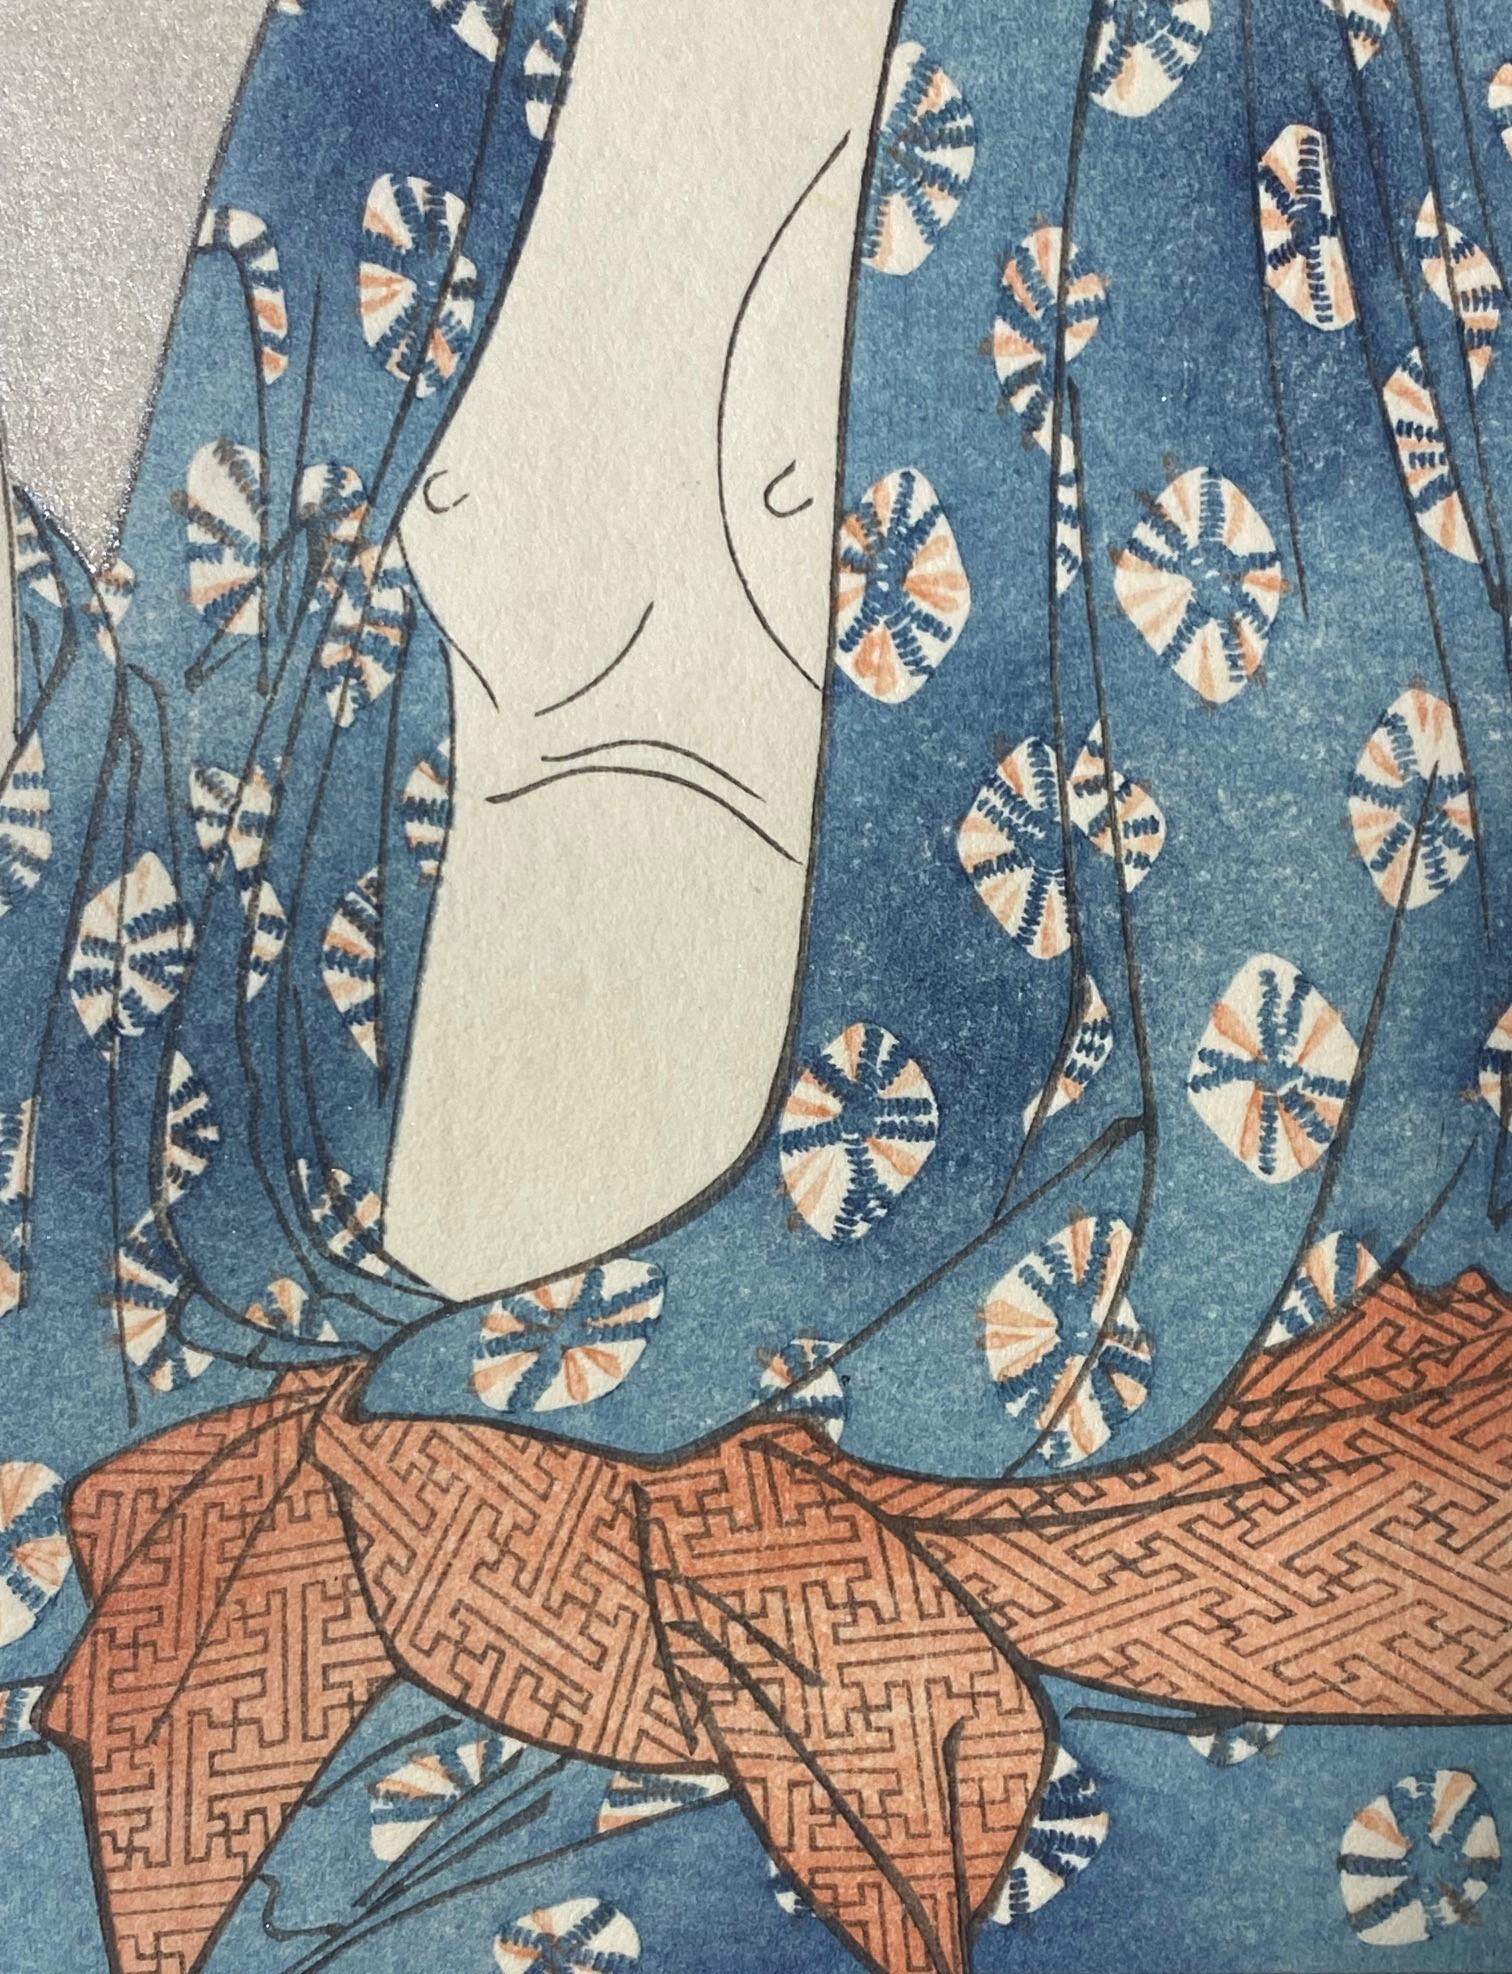 Kitagawa Utamaro Japanese Woodblock Print Edo Semi-Nude Woman Smoking Opium Pipe For Sale 1